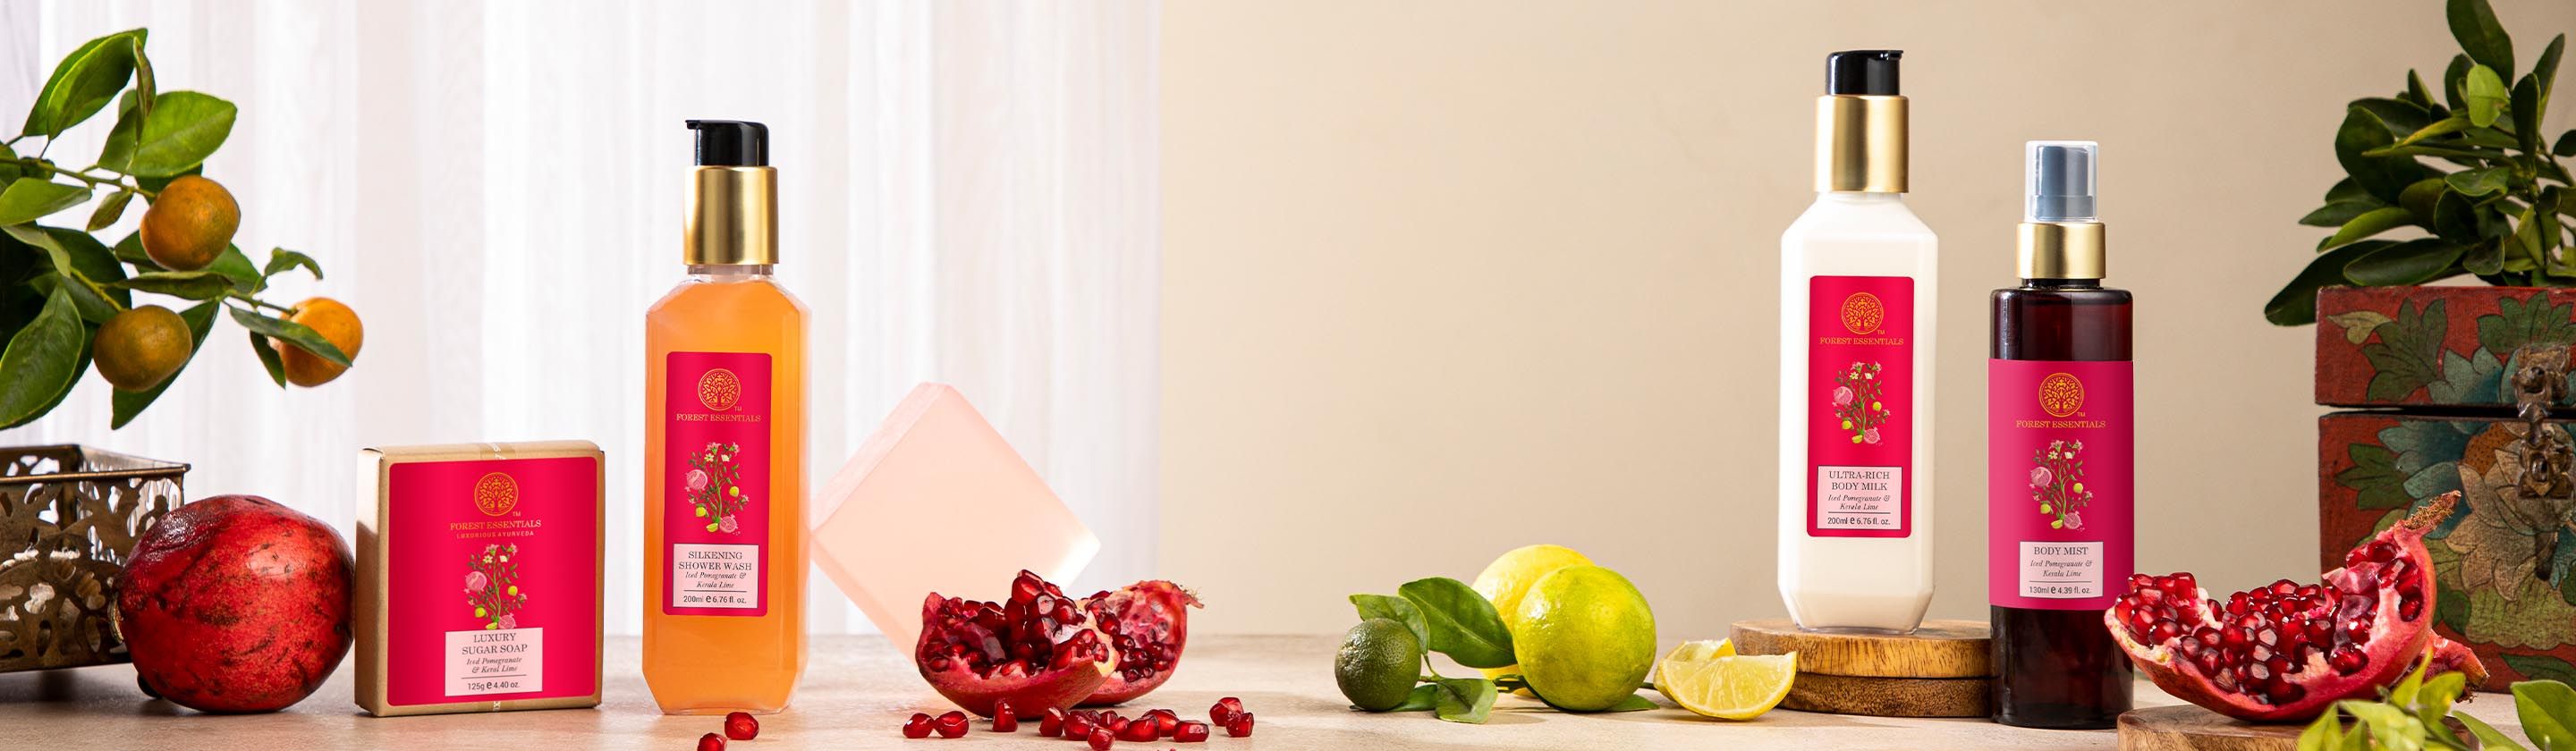 Iced Pomegranate & Kerala Lime